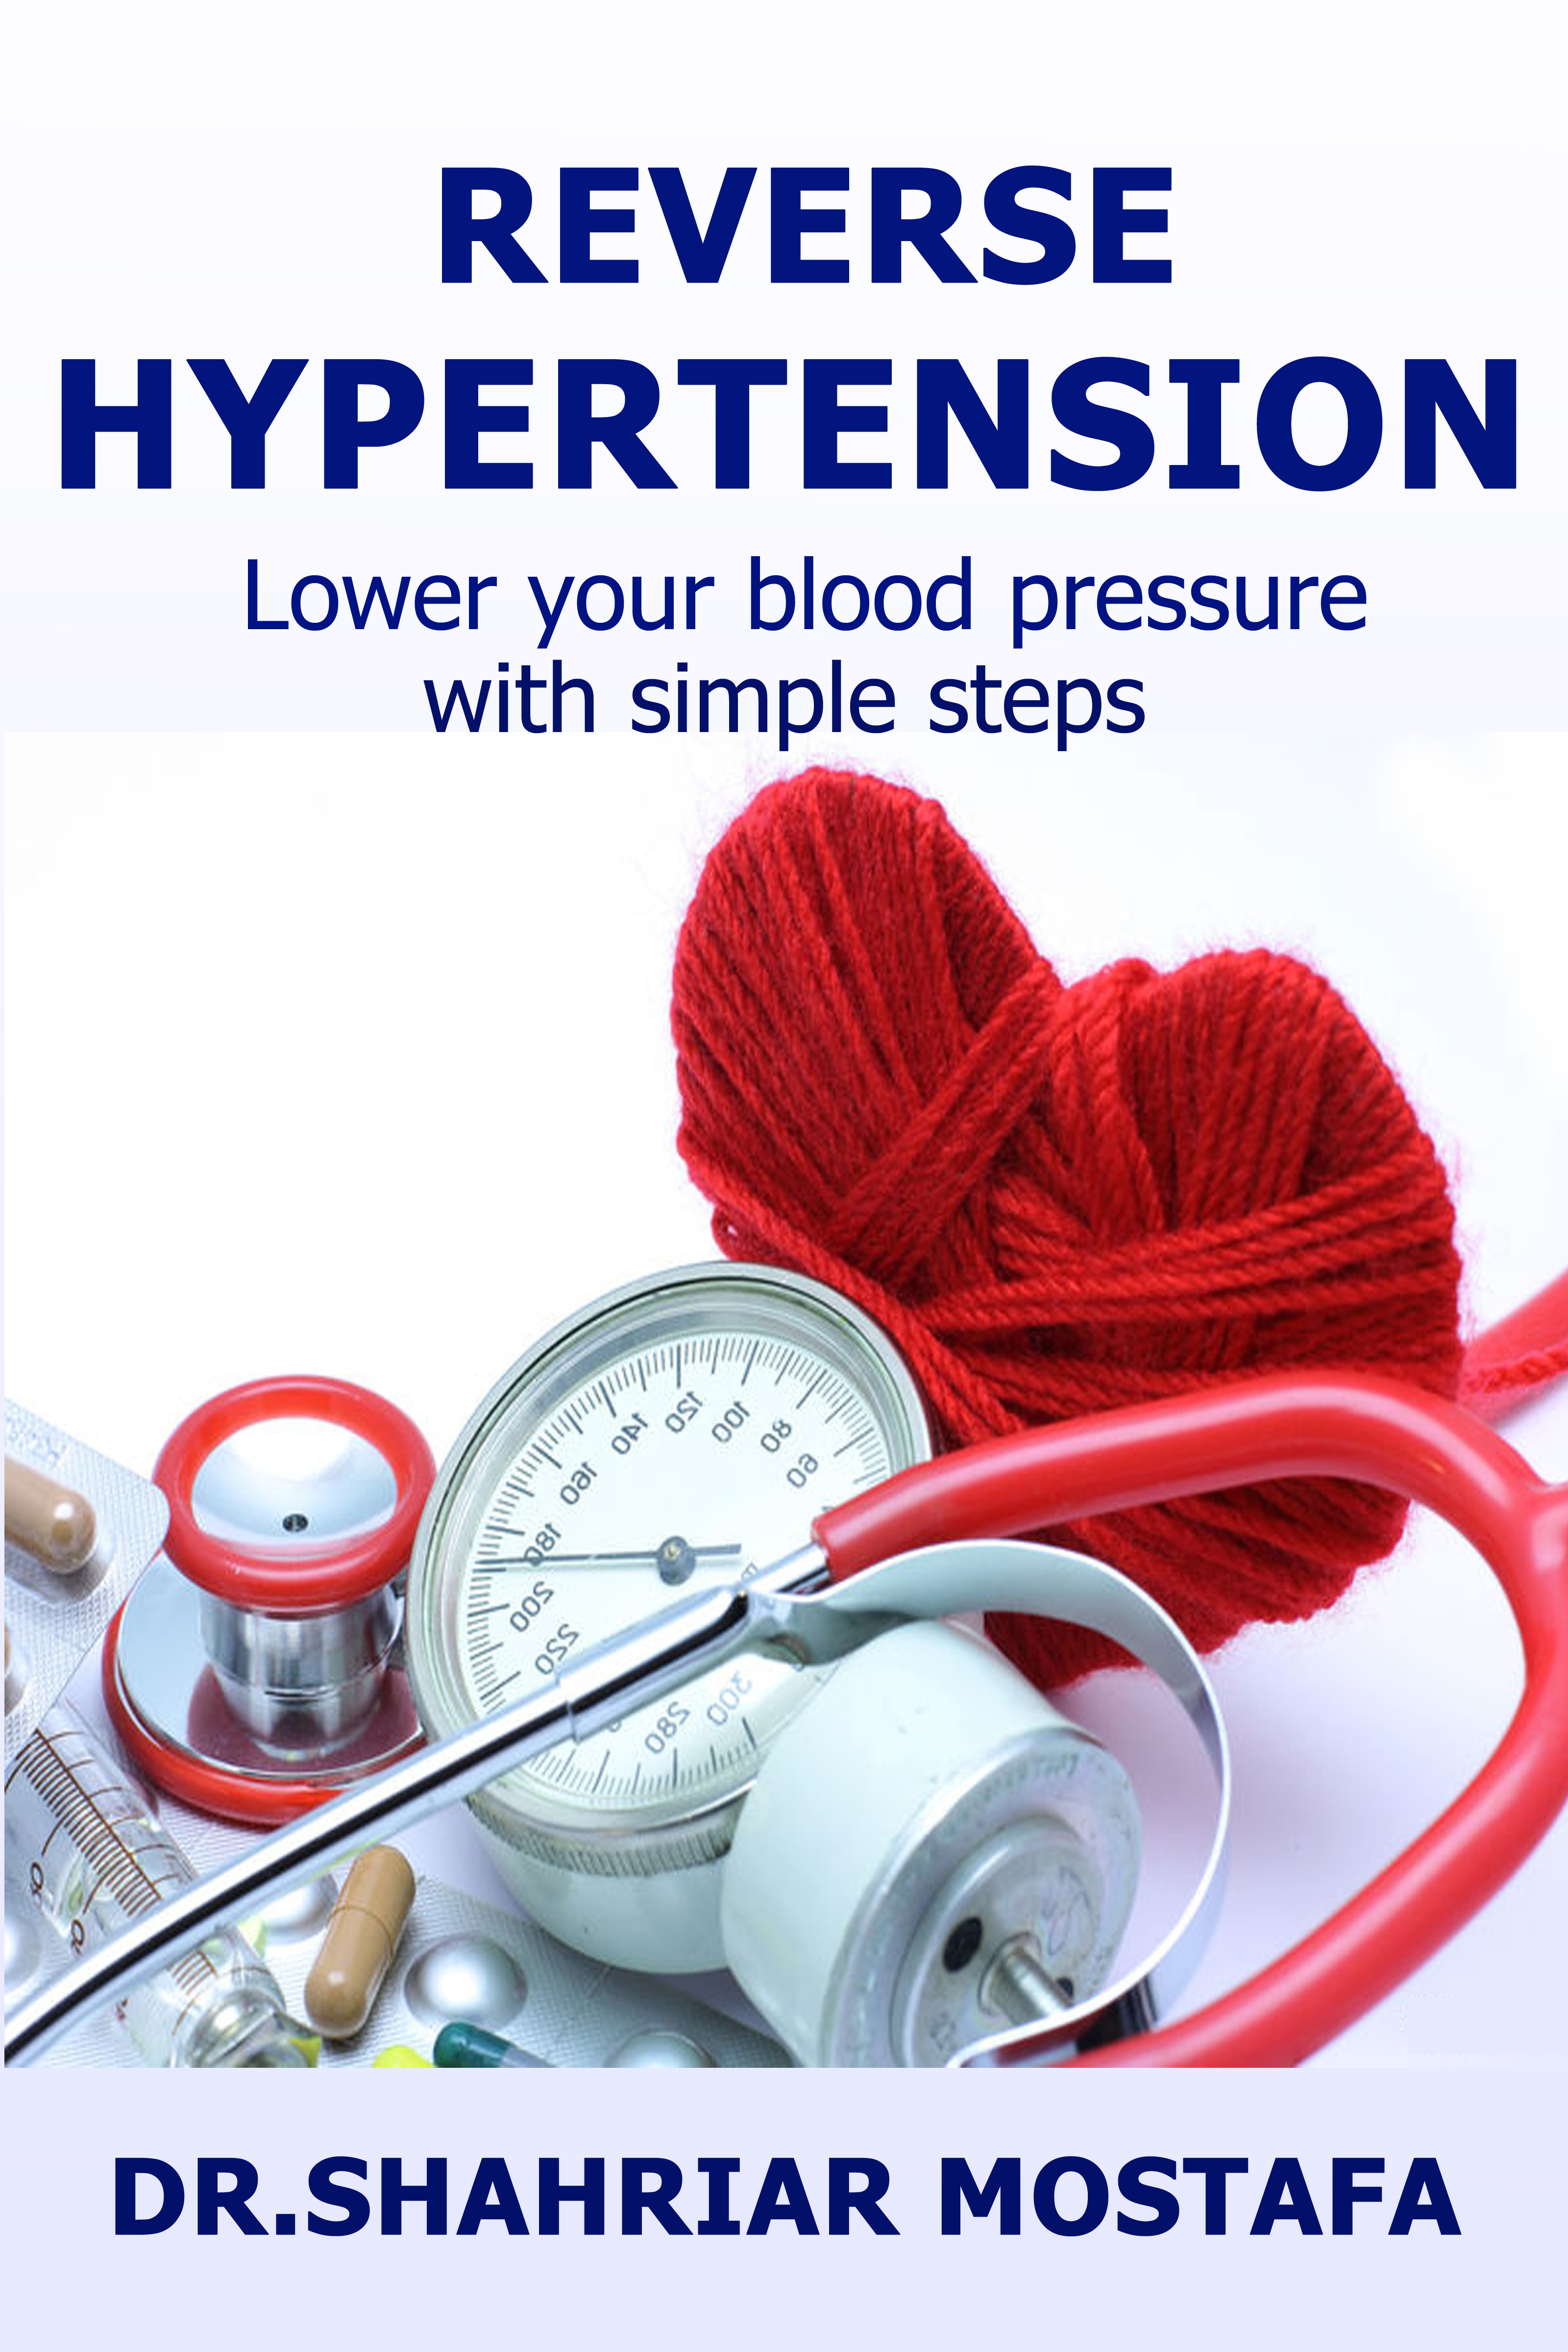 Reverse Hypertension